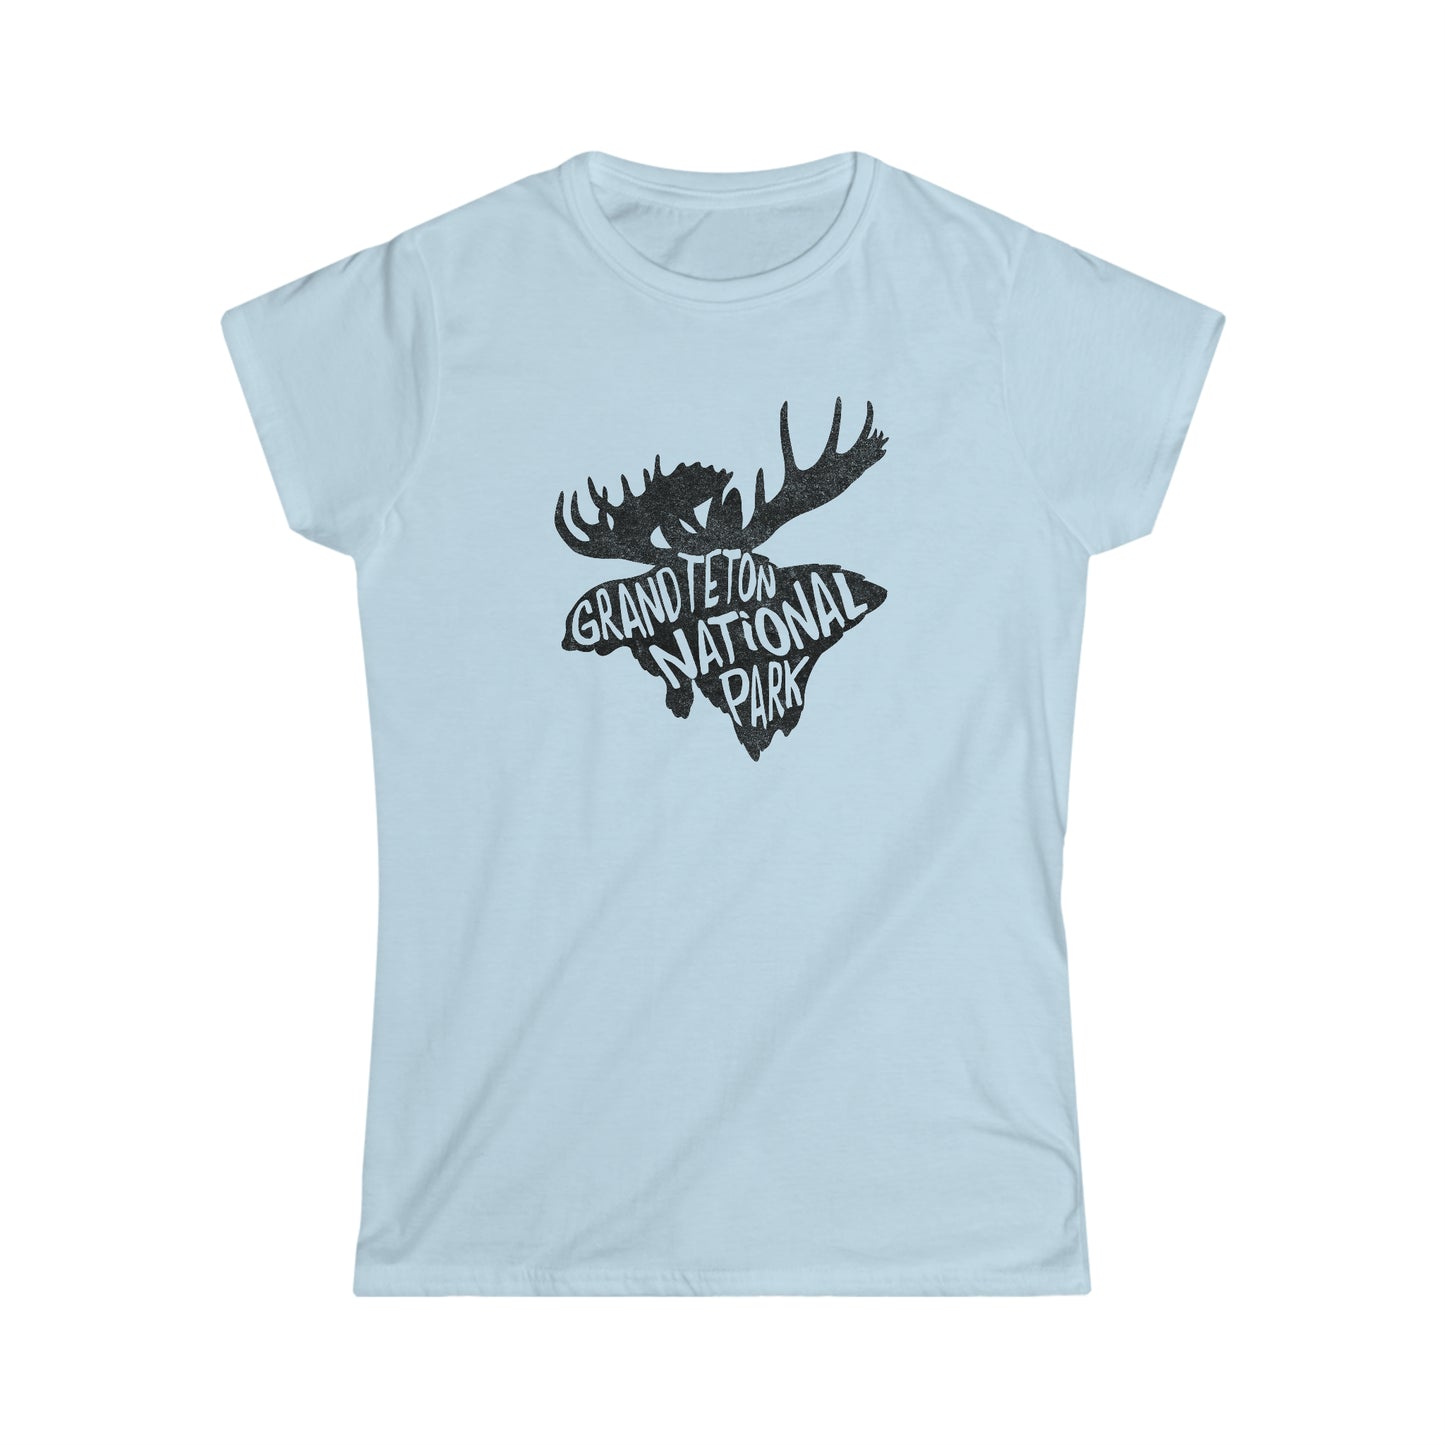 Grand Teton National Park Women's T-Shirt - Moose